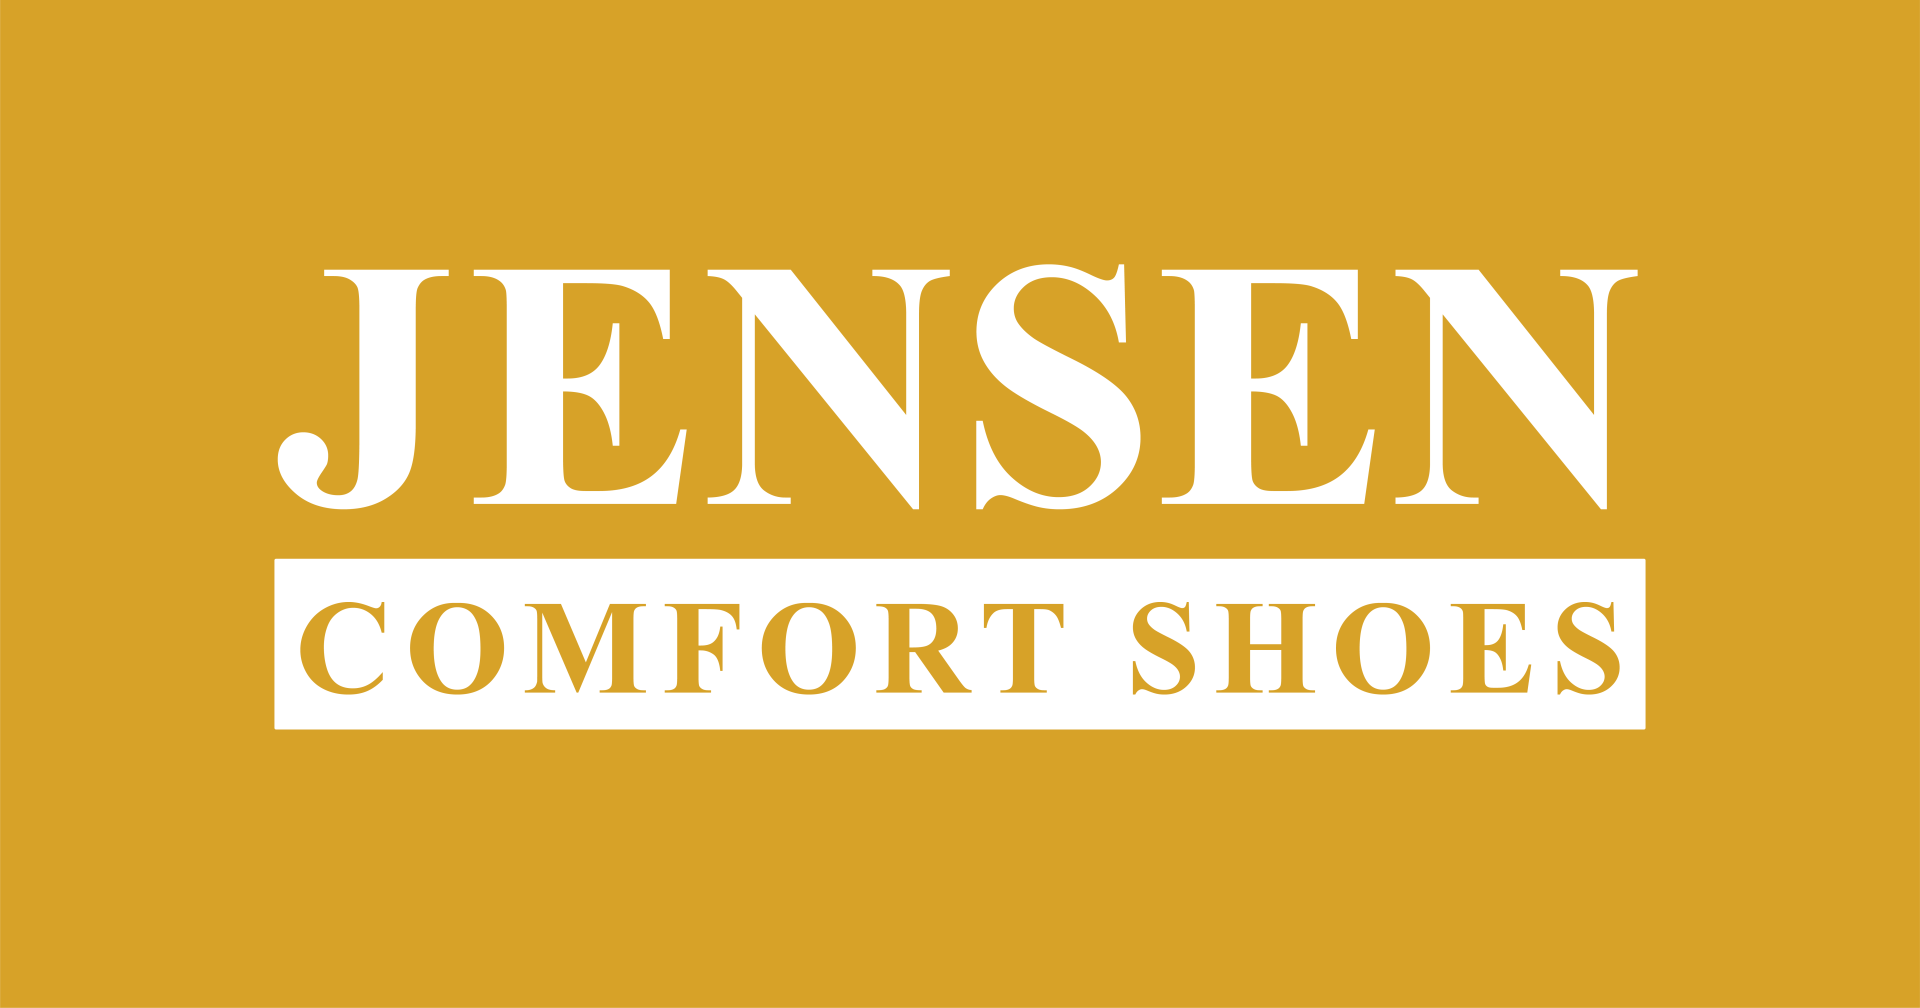 Contact Us | Jensen Comfort Shoes